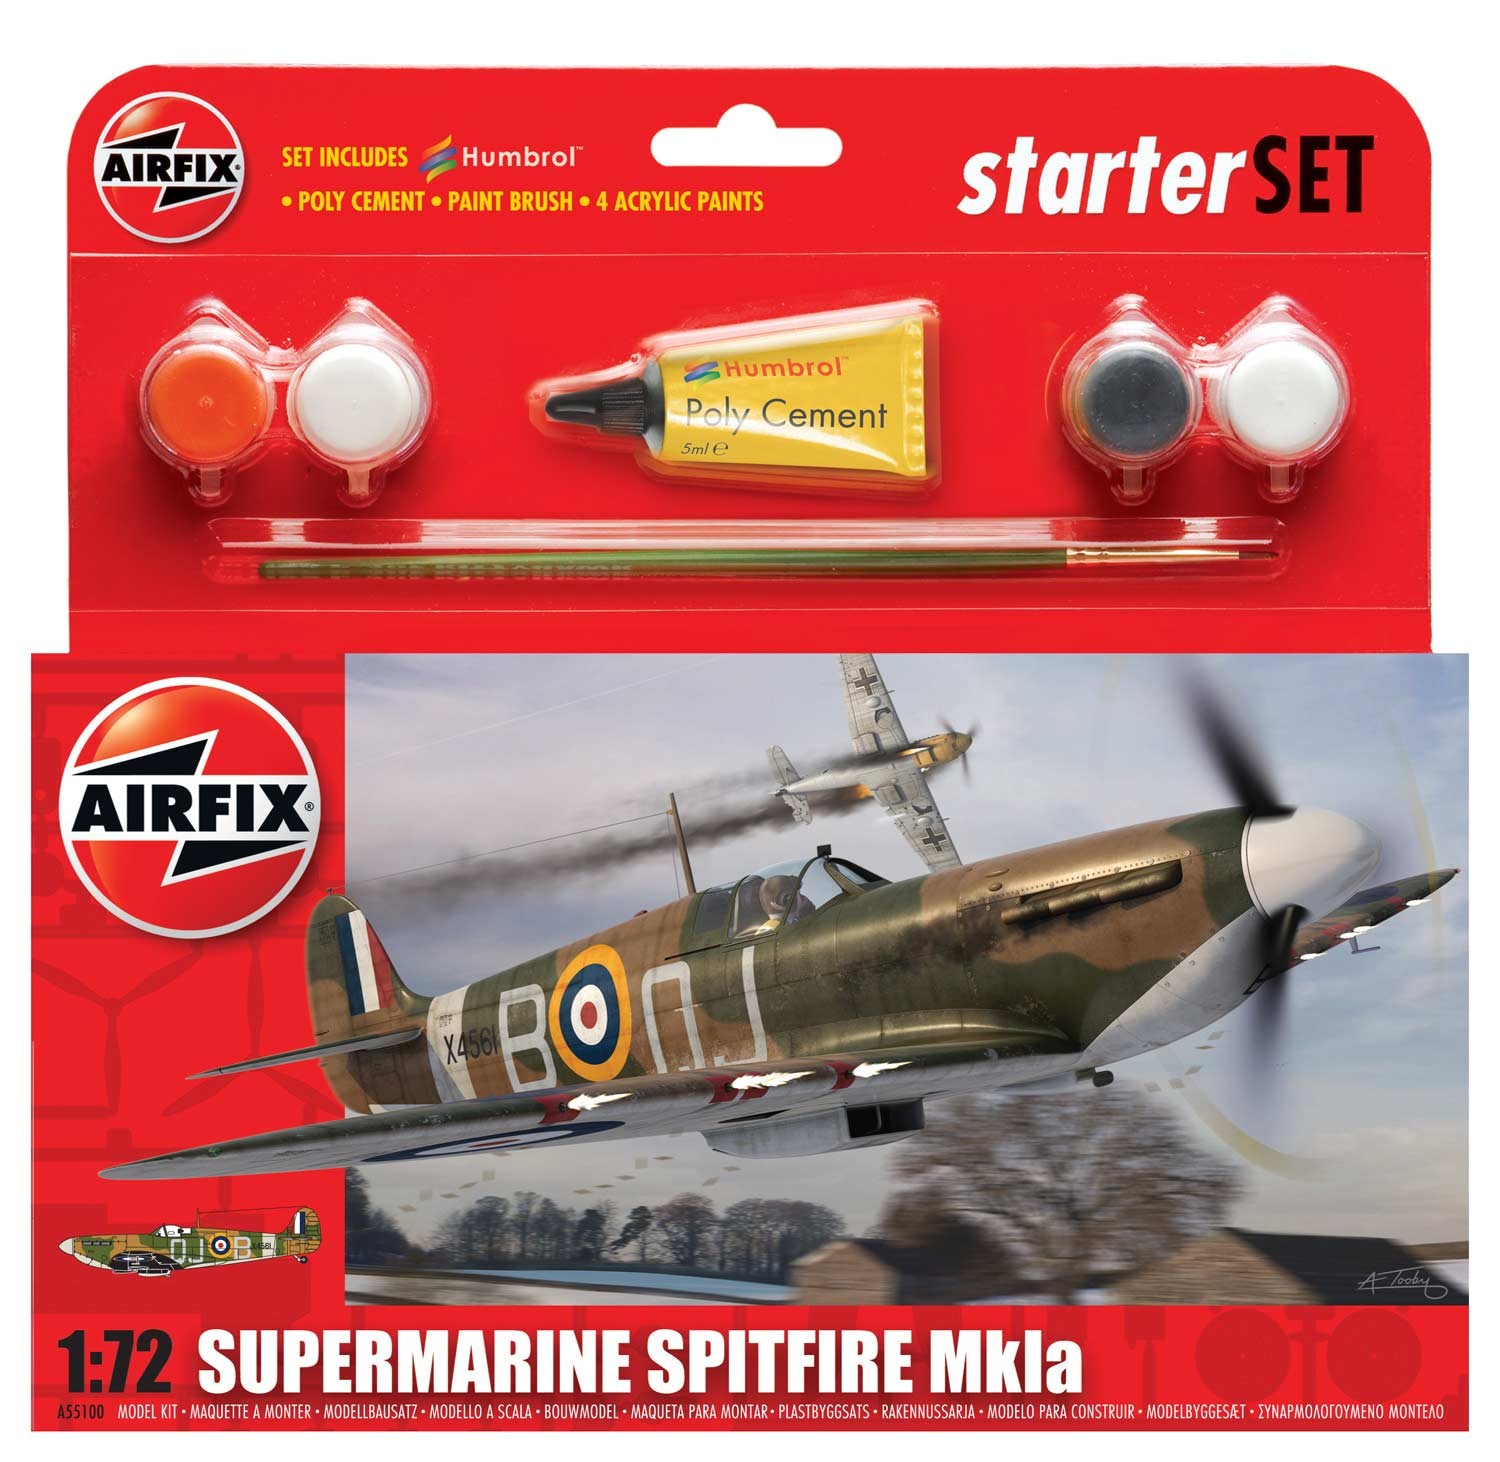 Airfix Supermarine Spitfire Mk.la Starter Set in 1:72 bouwpakket met lijm en verf